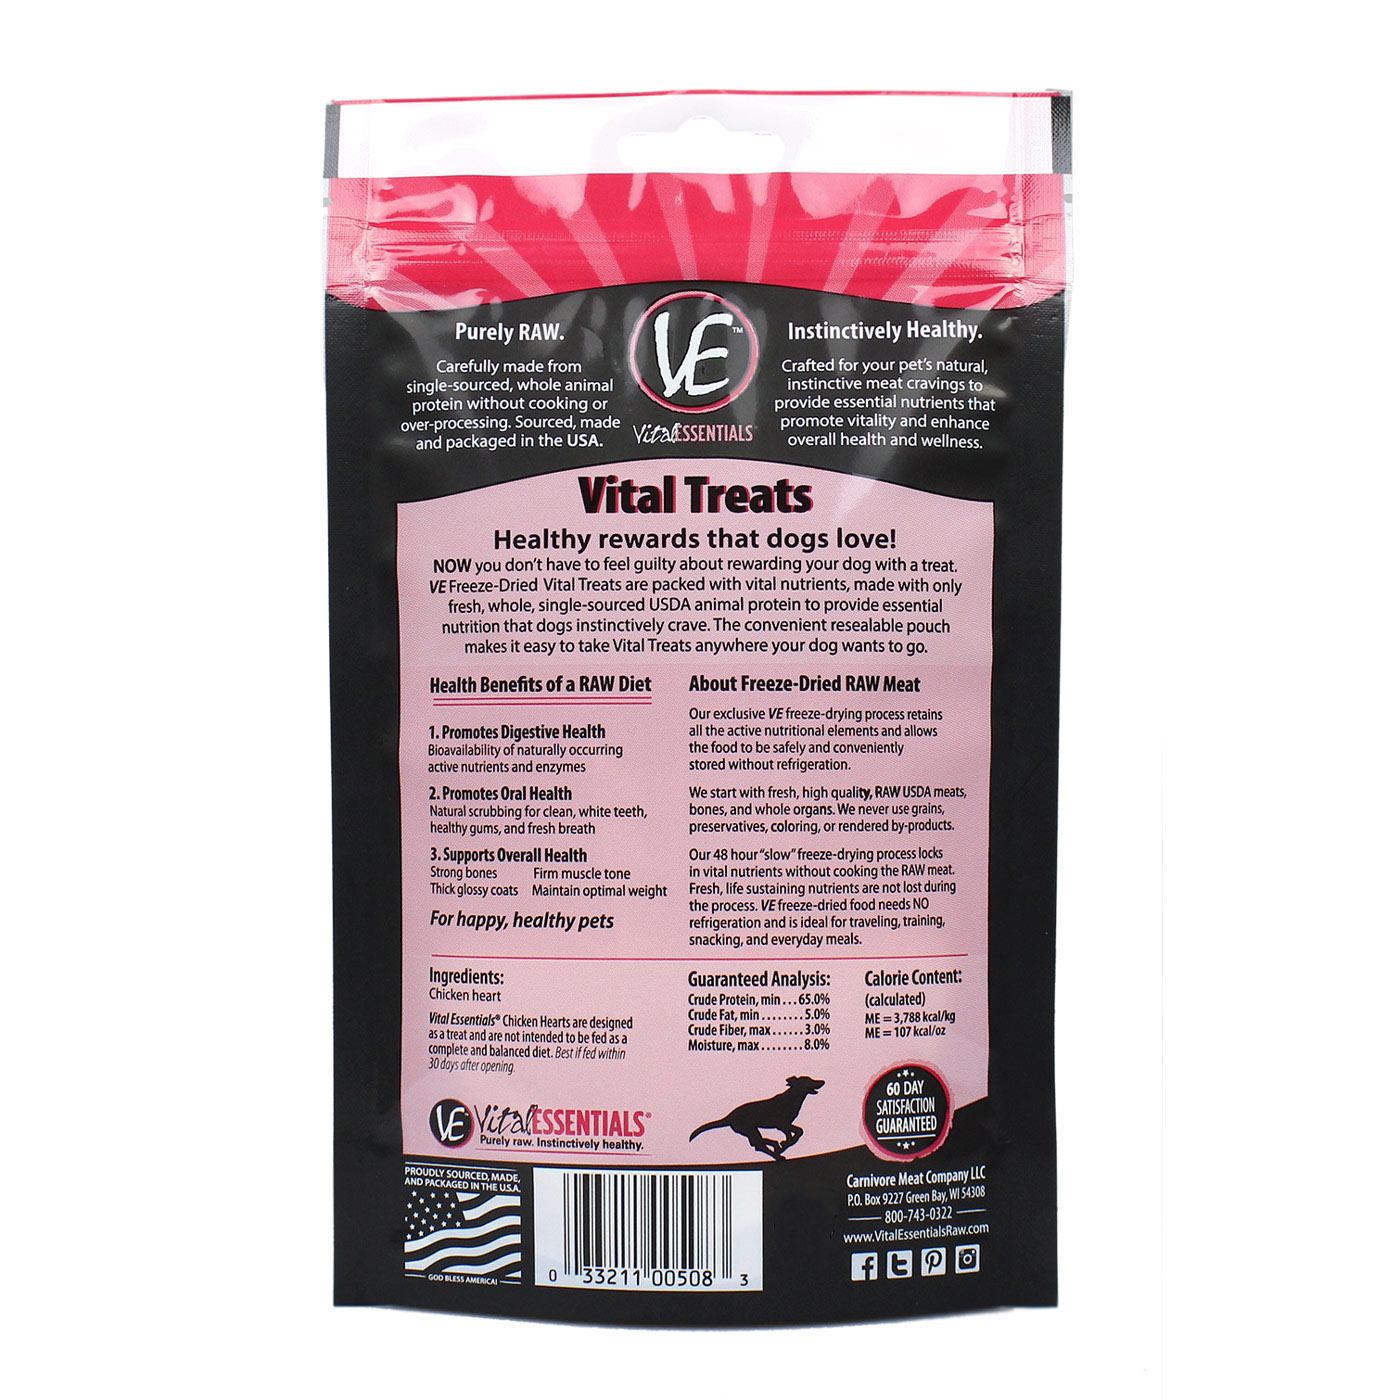 Vital Essentials Vital Essentials Freeze Dried Raw Chicken Hearts 1.9oz